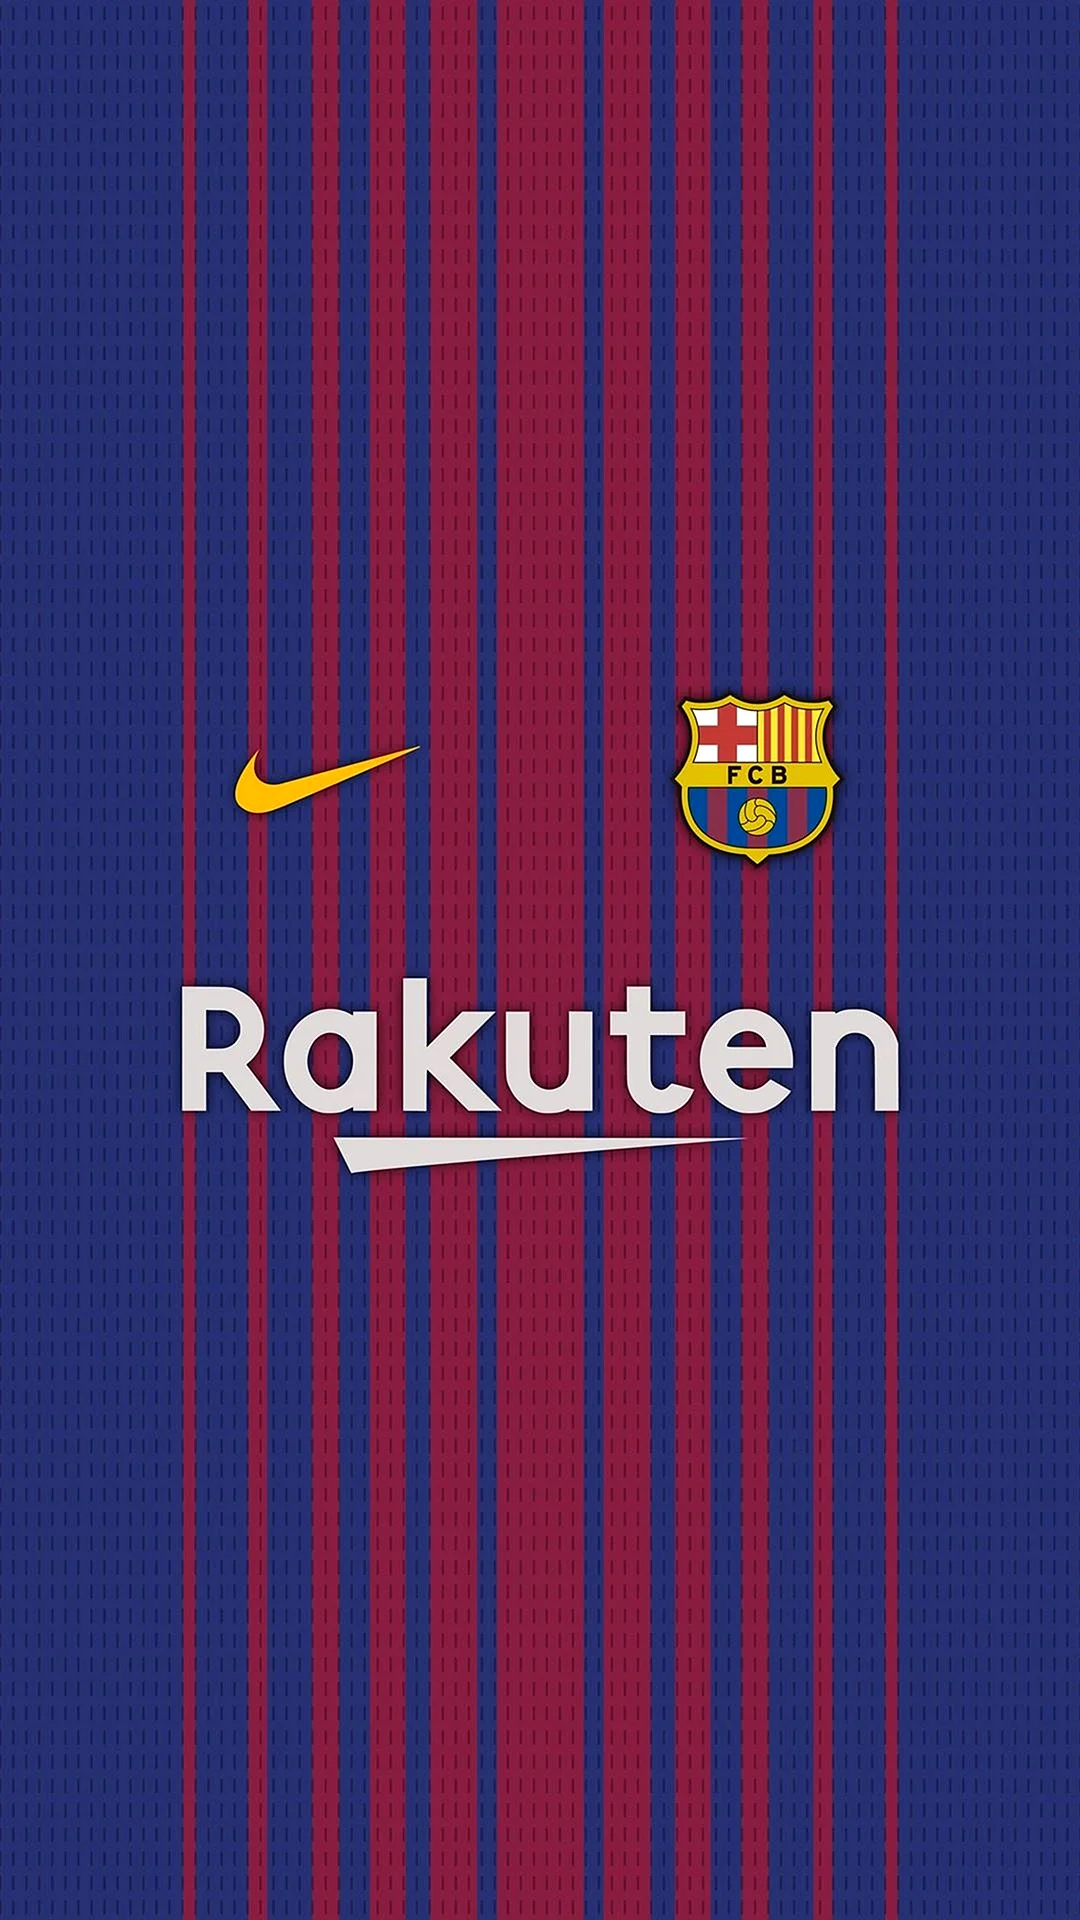 2020 Fc Barcelona Logo Wallpaper For iPhone